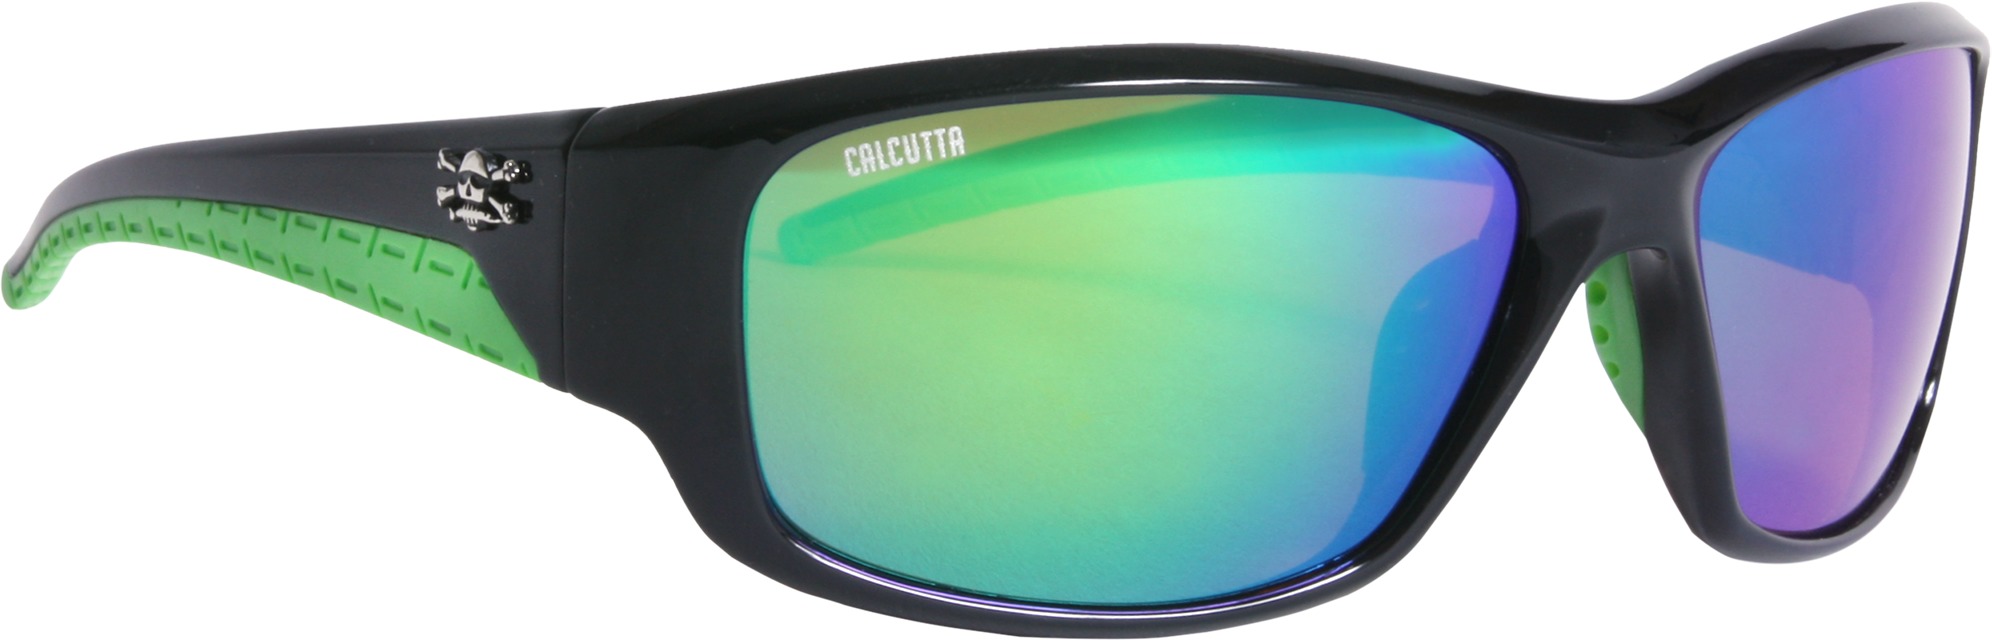 Calcutta J1GM Jost Shiny Black Frame Green Mirror Lens